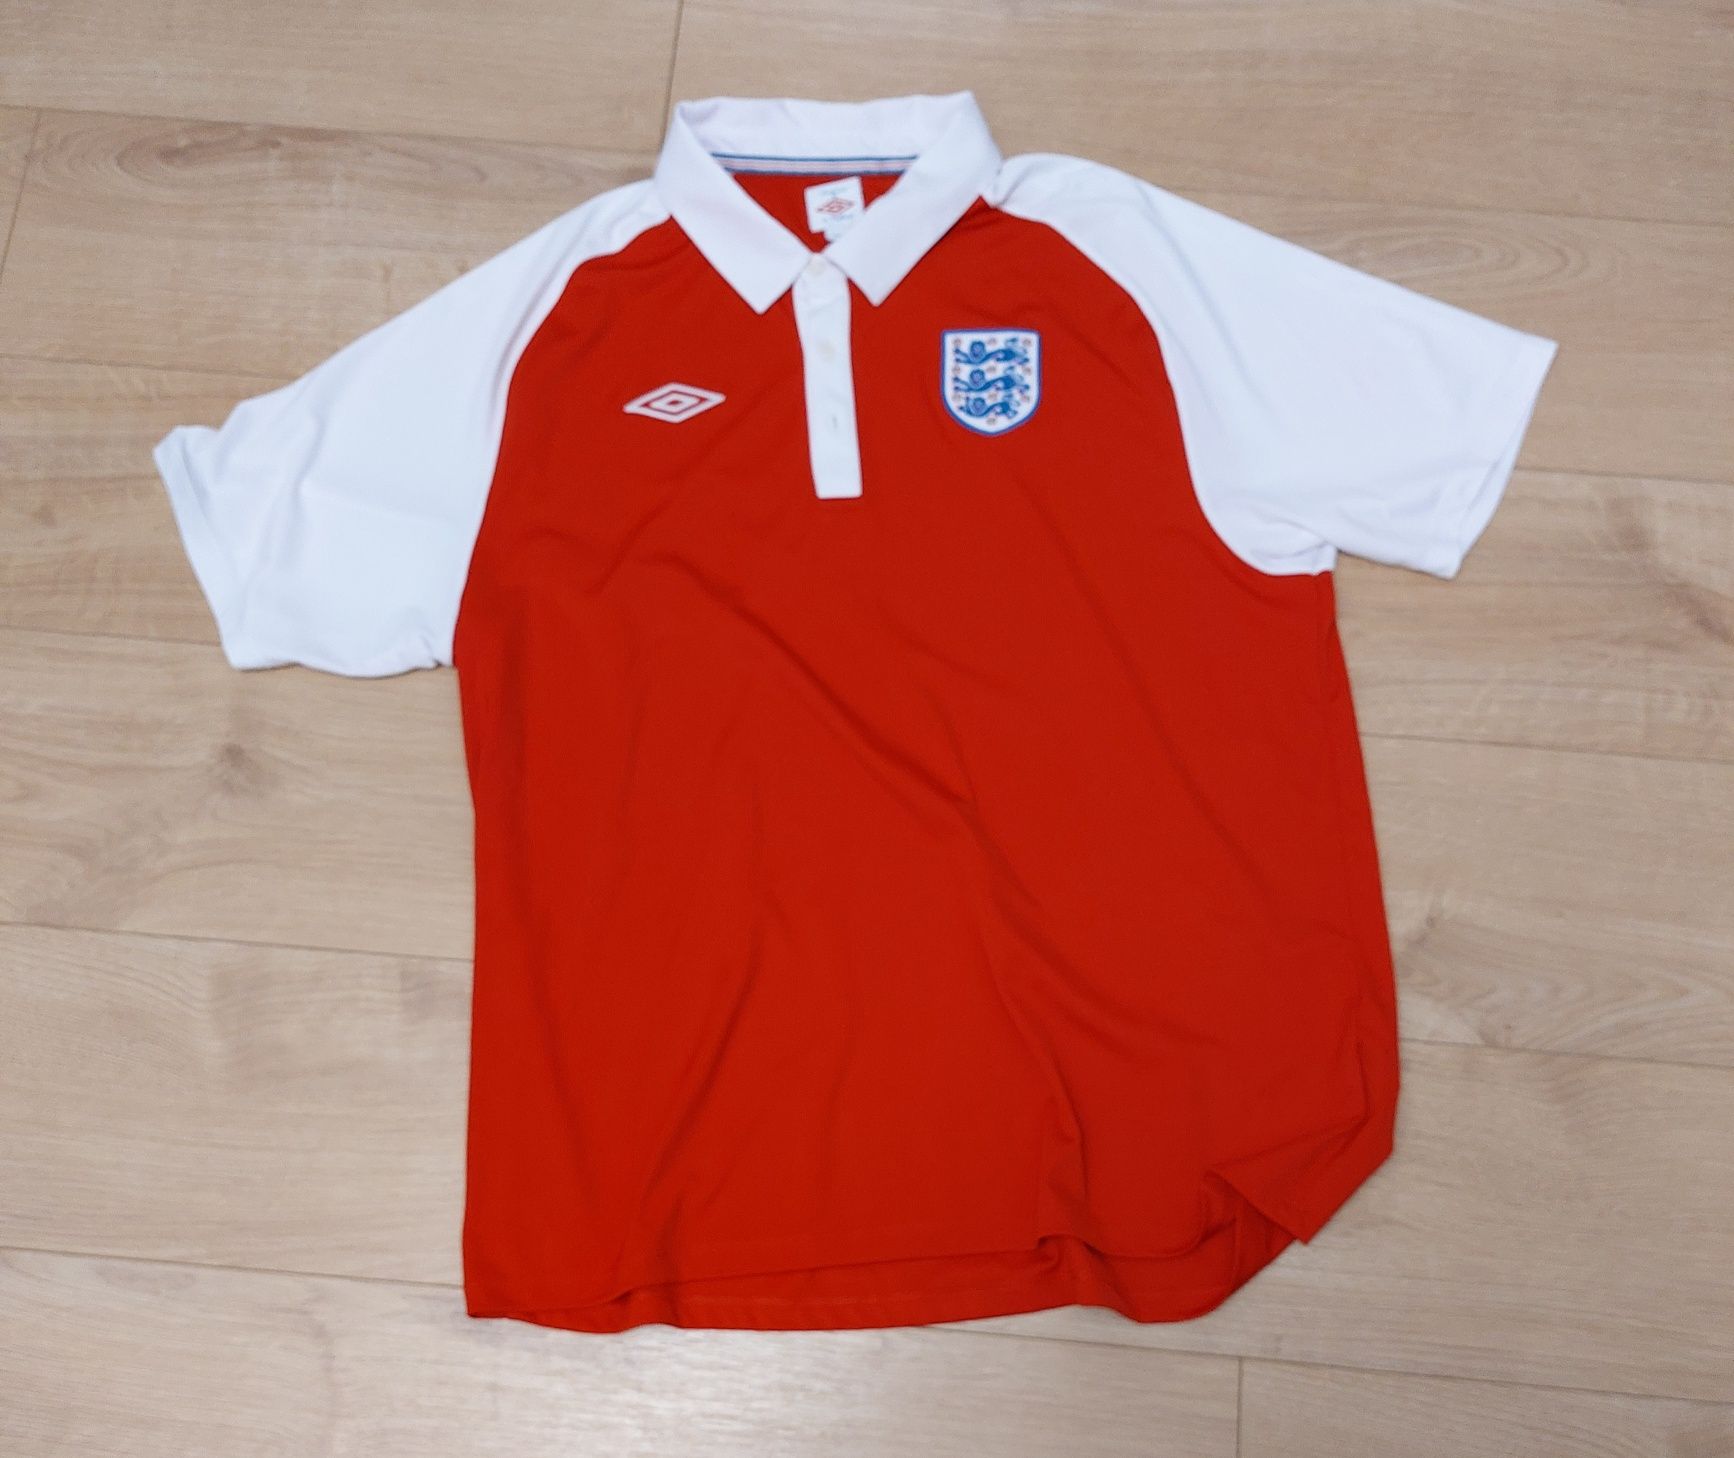 Orginalna koszulka piłkarska reprezentacji Anglii z sezonu 2010/11